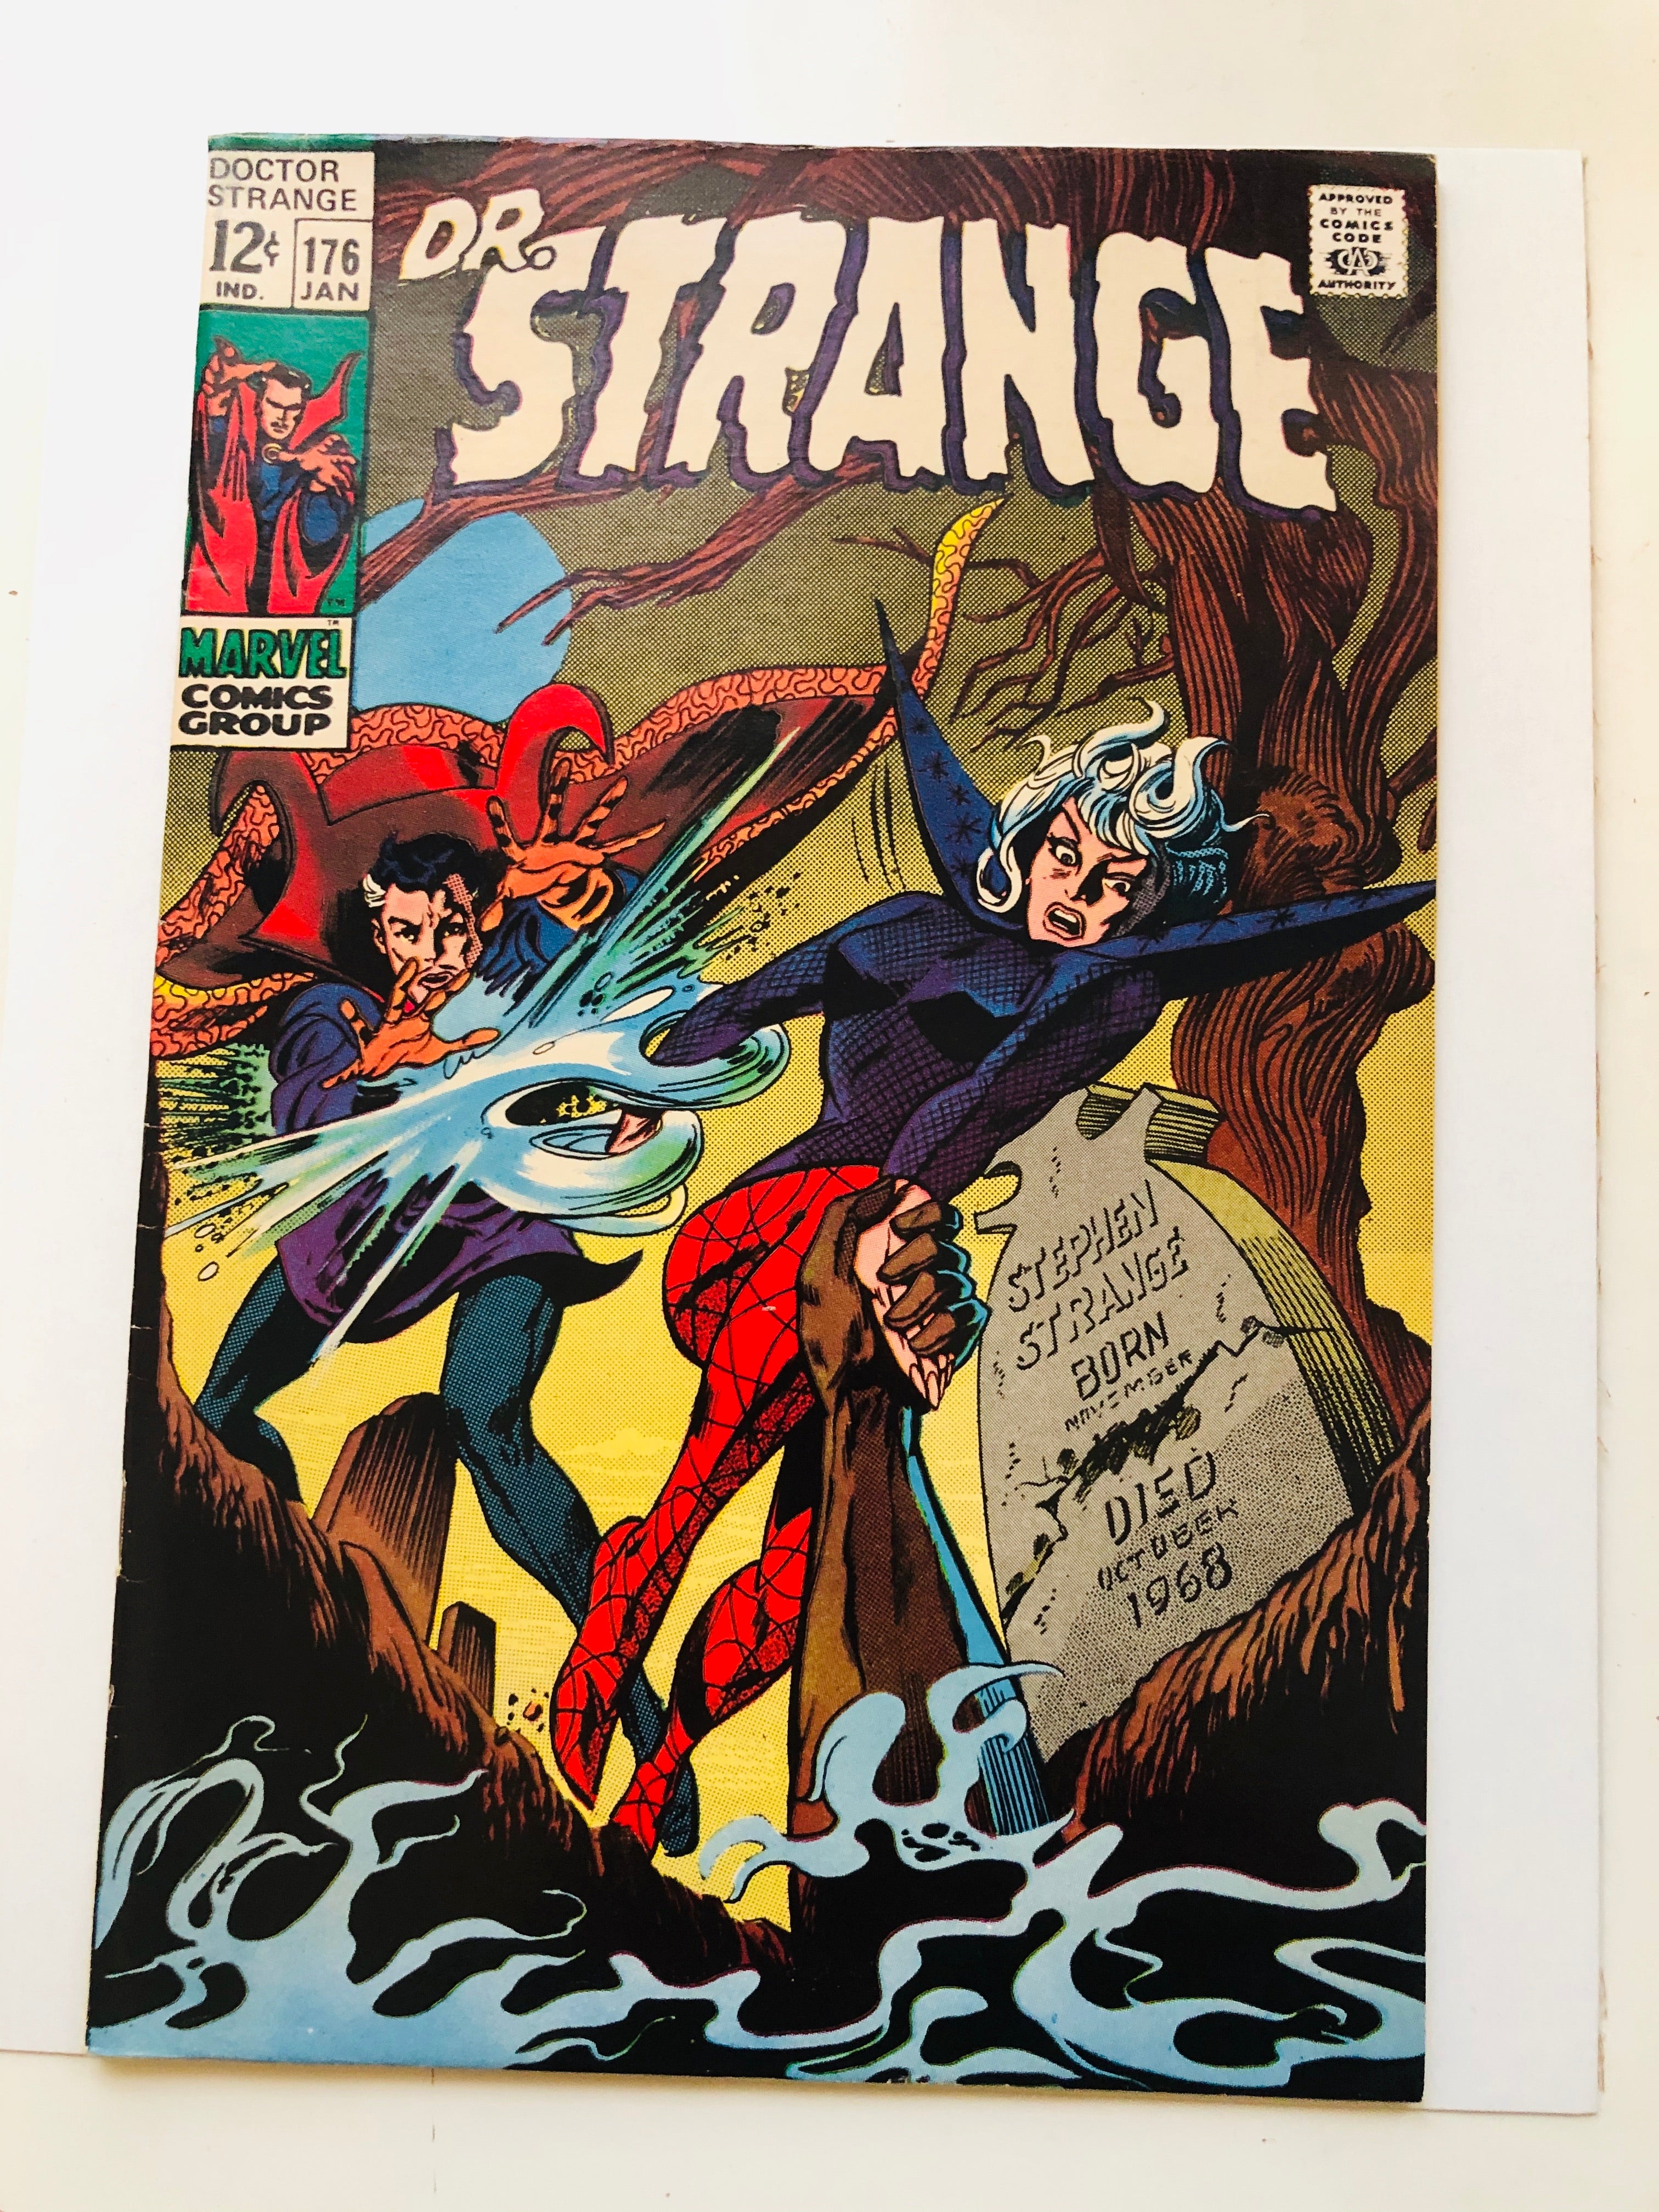 1968 Dr. Strange #176 comic book